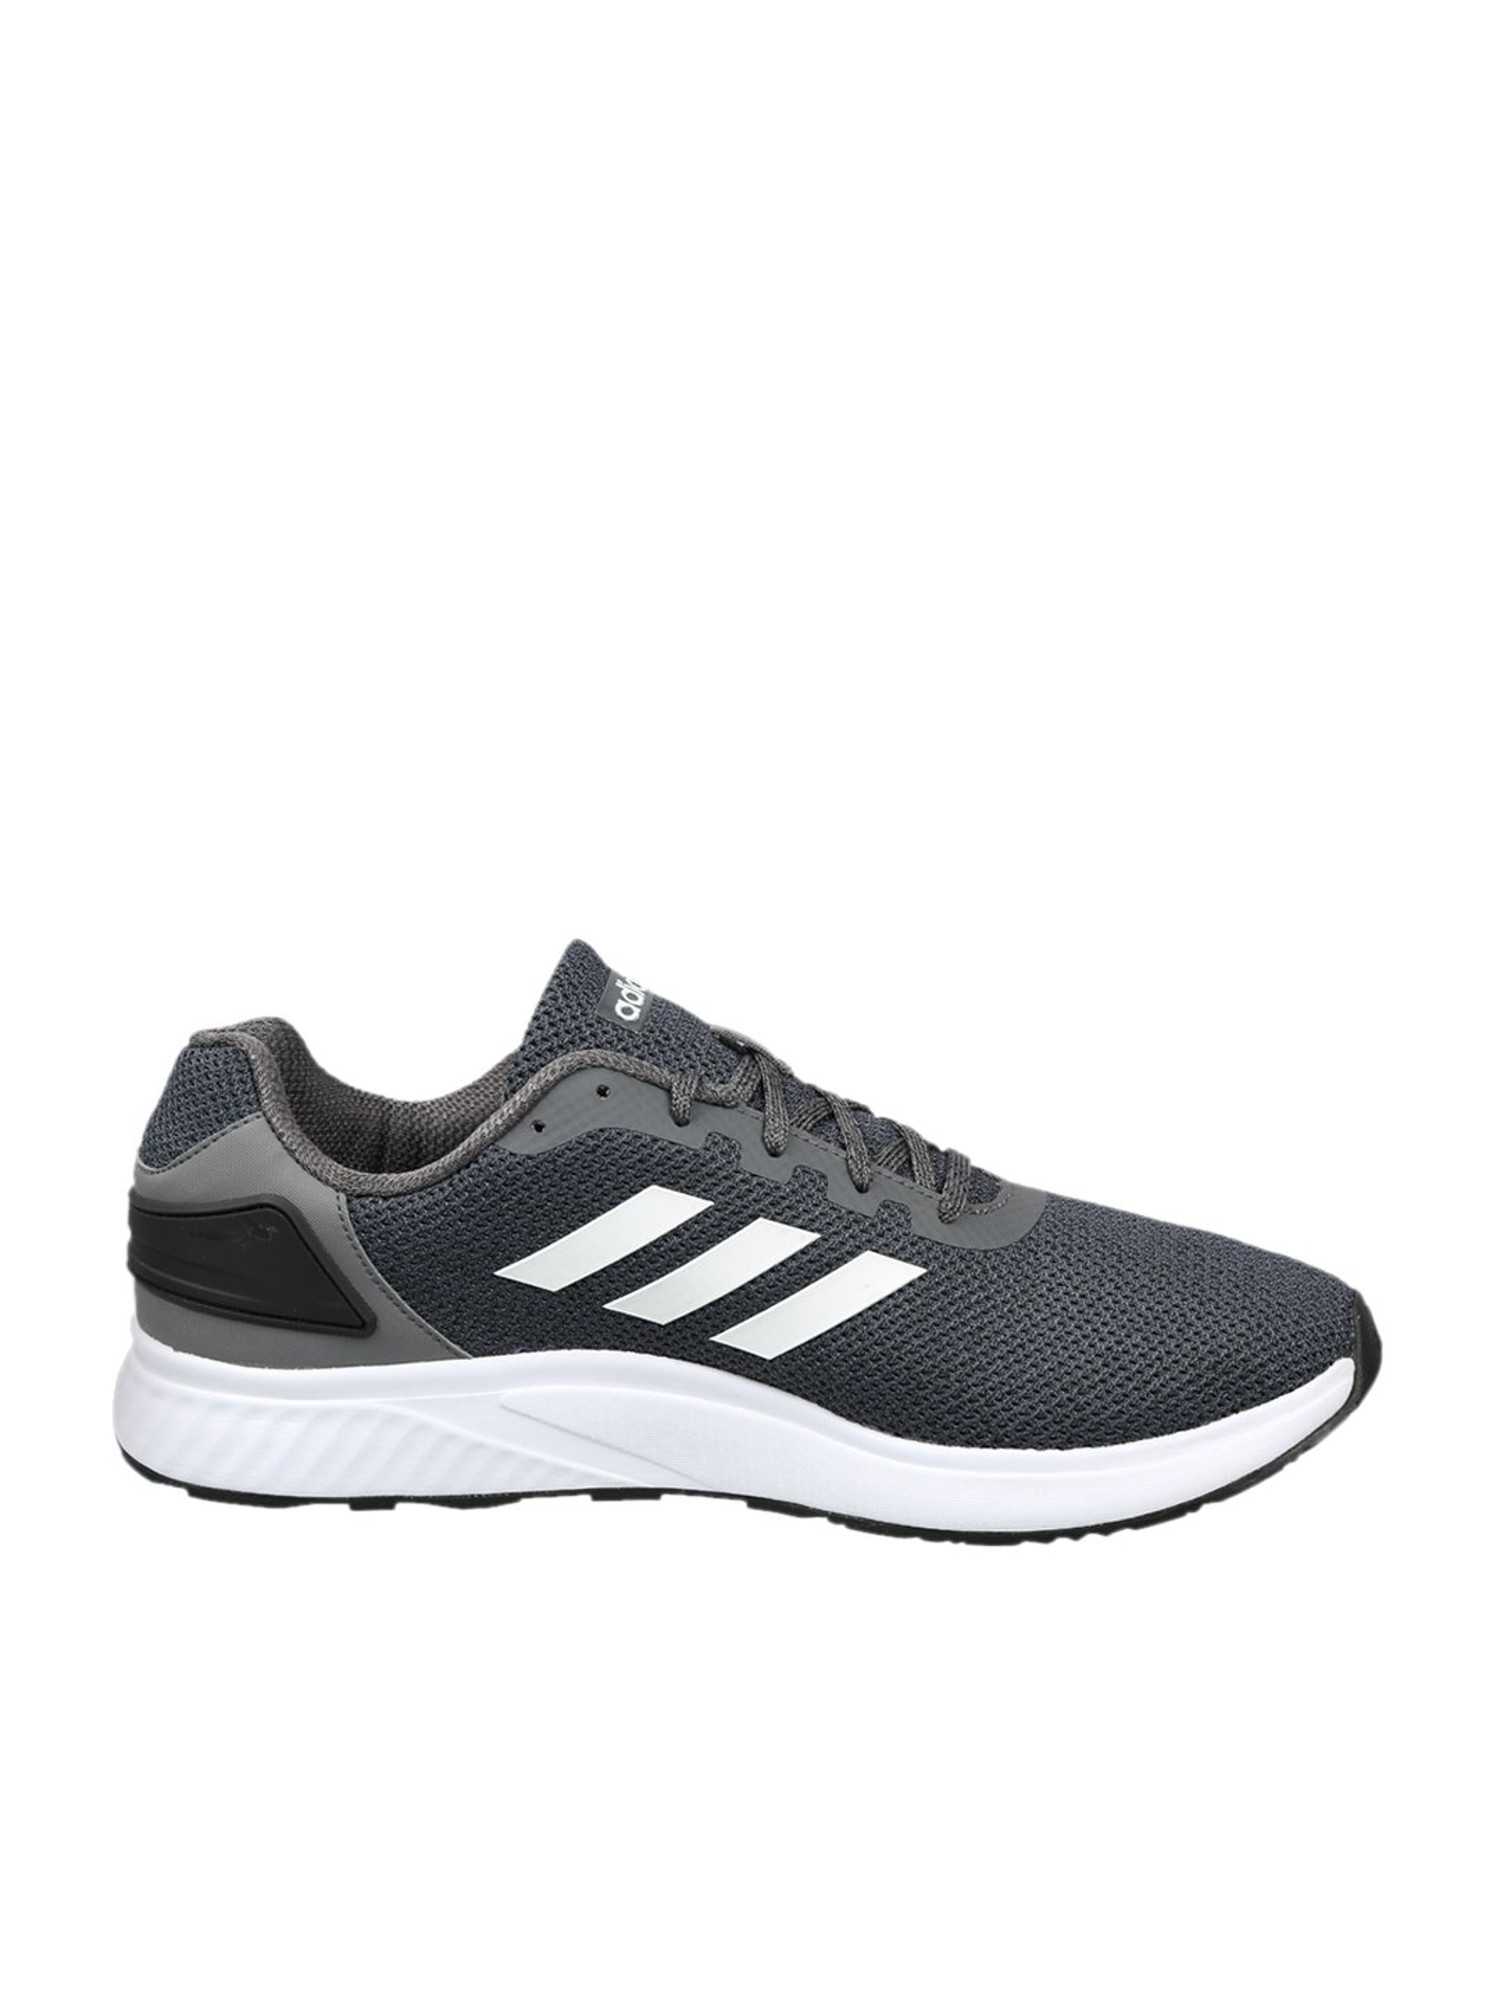 adidas ryzo 4.0 running shoes